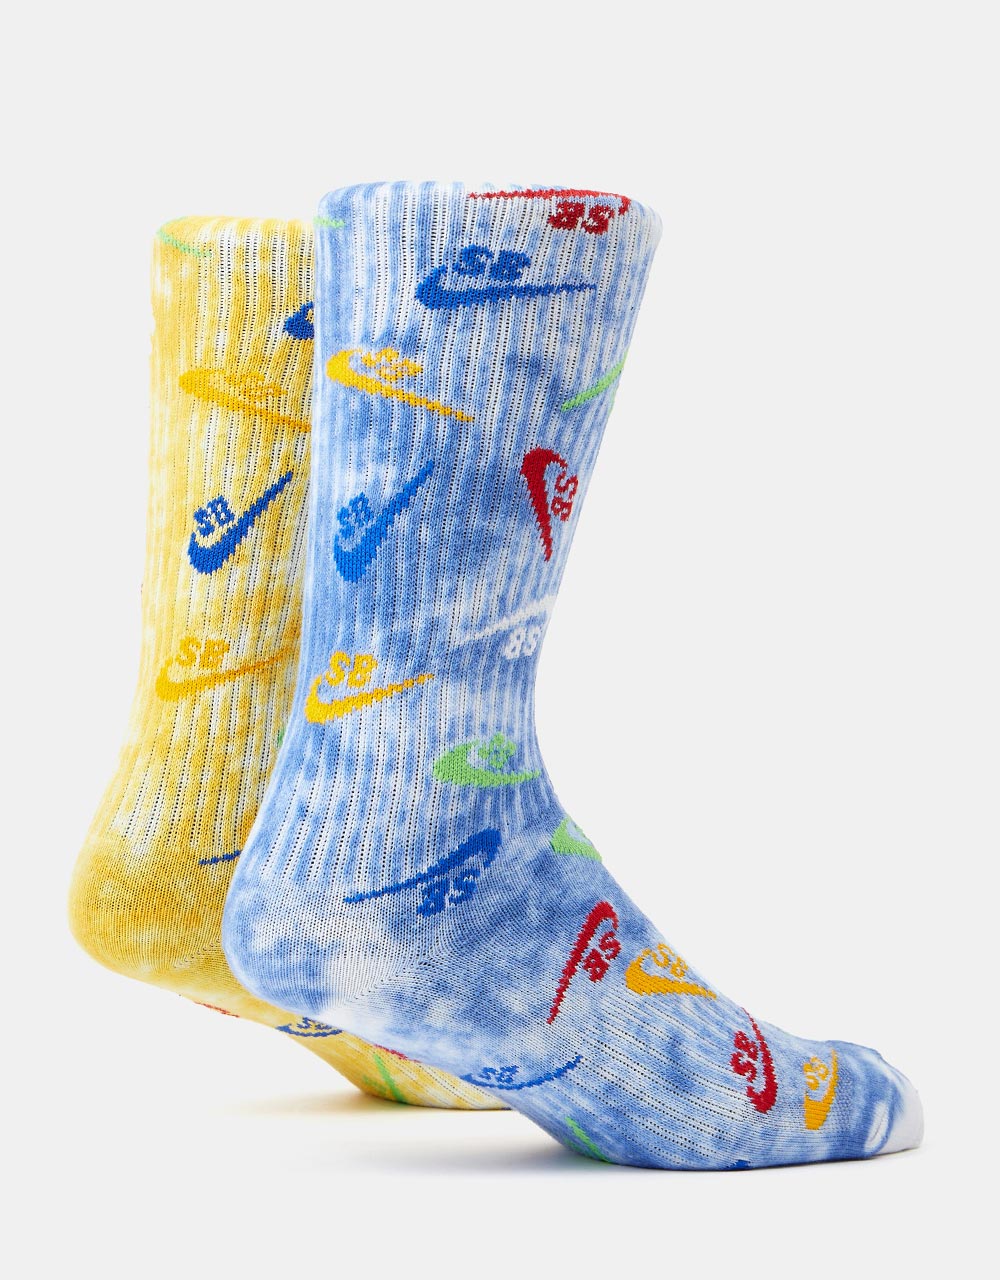 Nike SB 'Sandy' Everyday Max Lightweight Socks - Multi-Colour